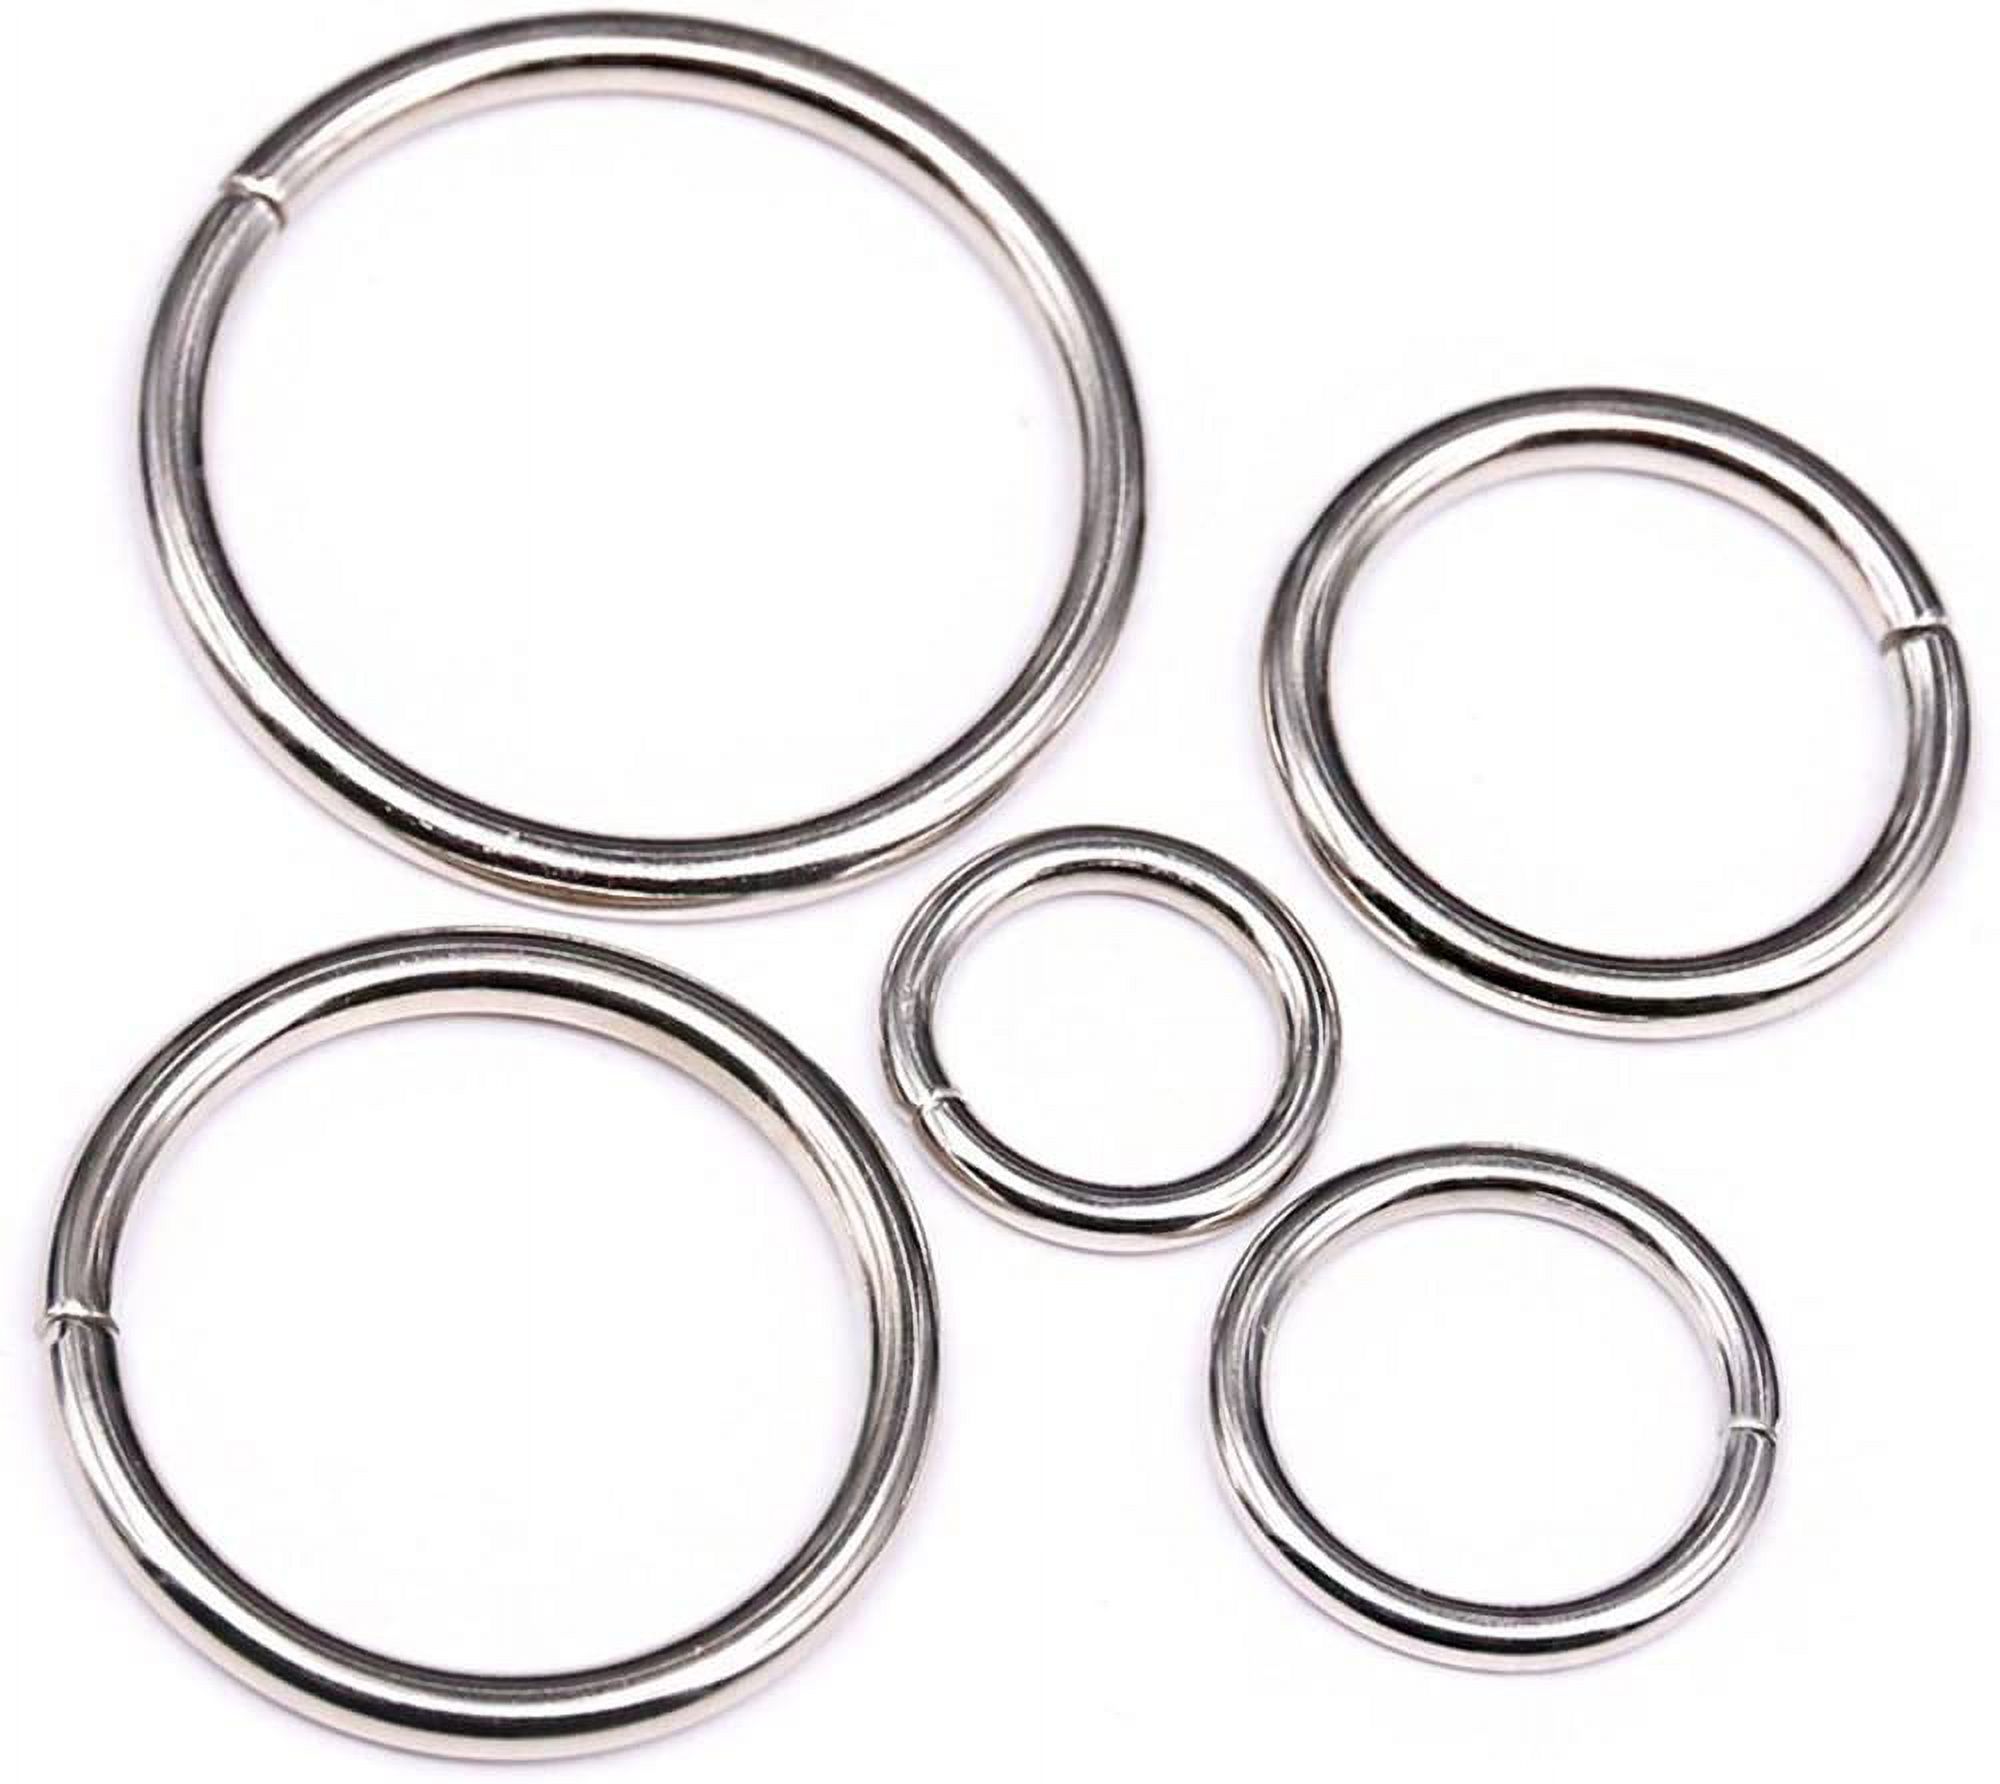 Swpeet 50 Pcs Sliver Assorted Multi-Purpose Metal O Ring for